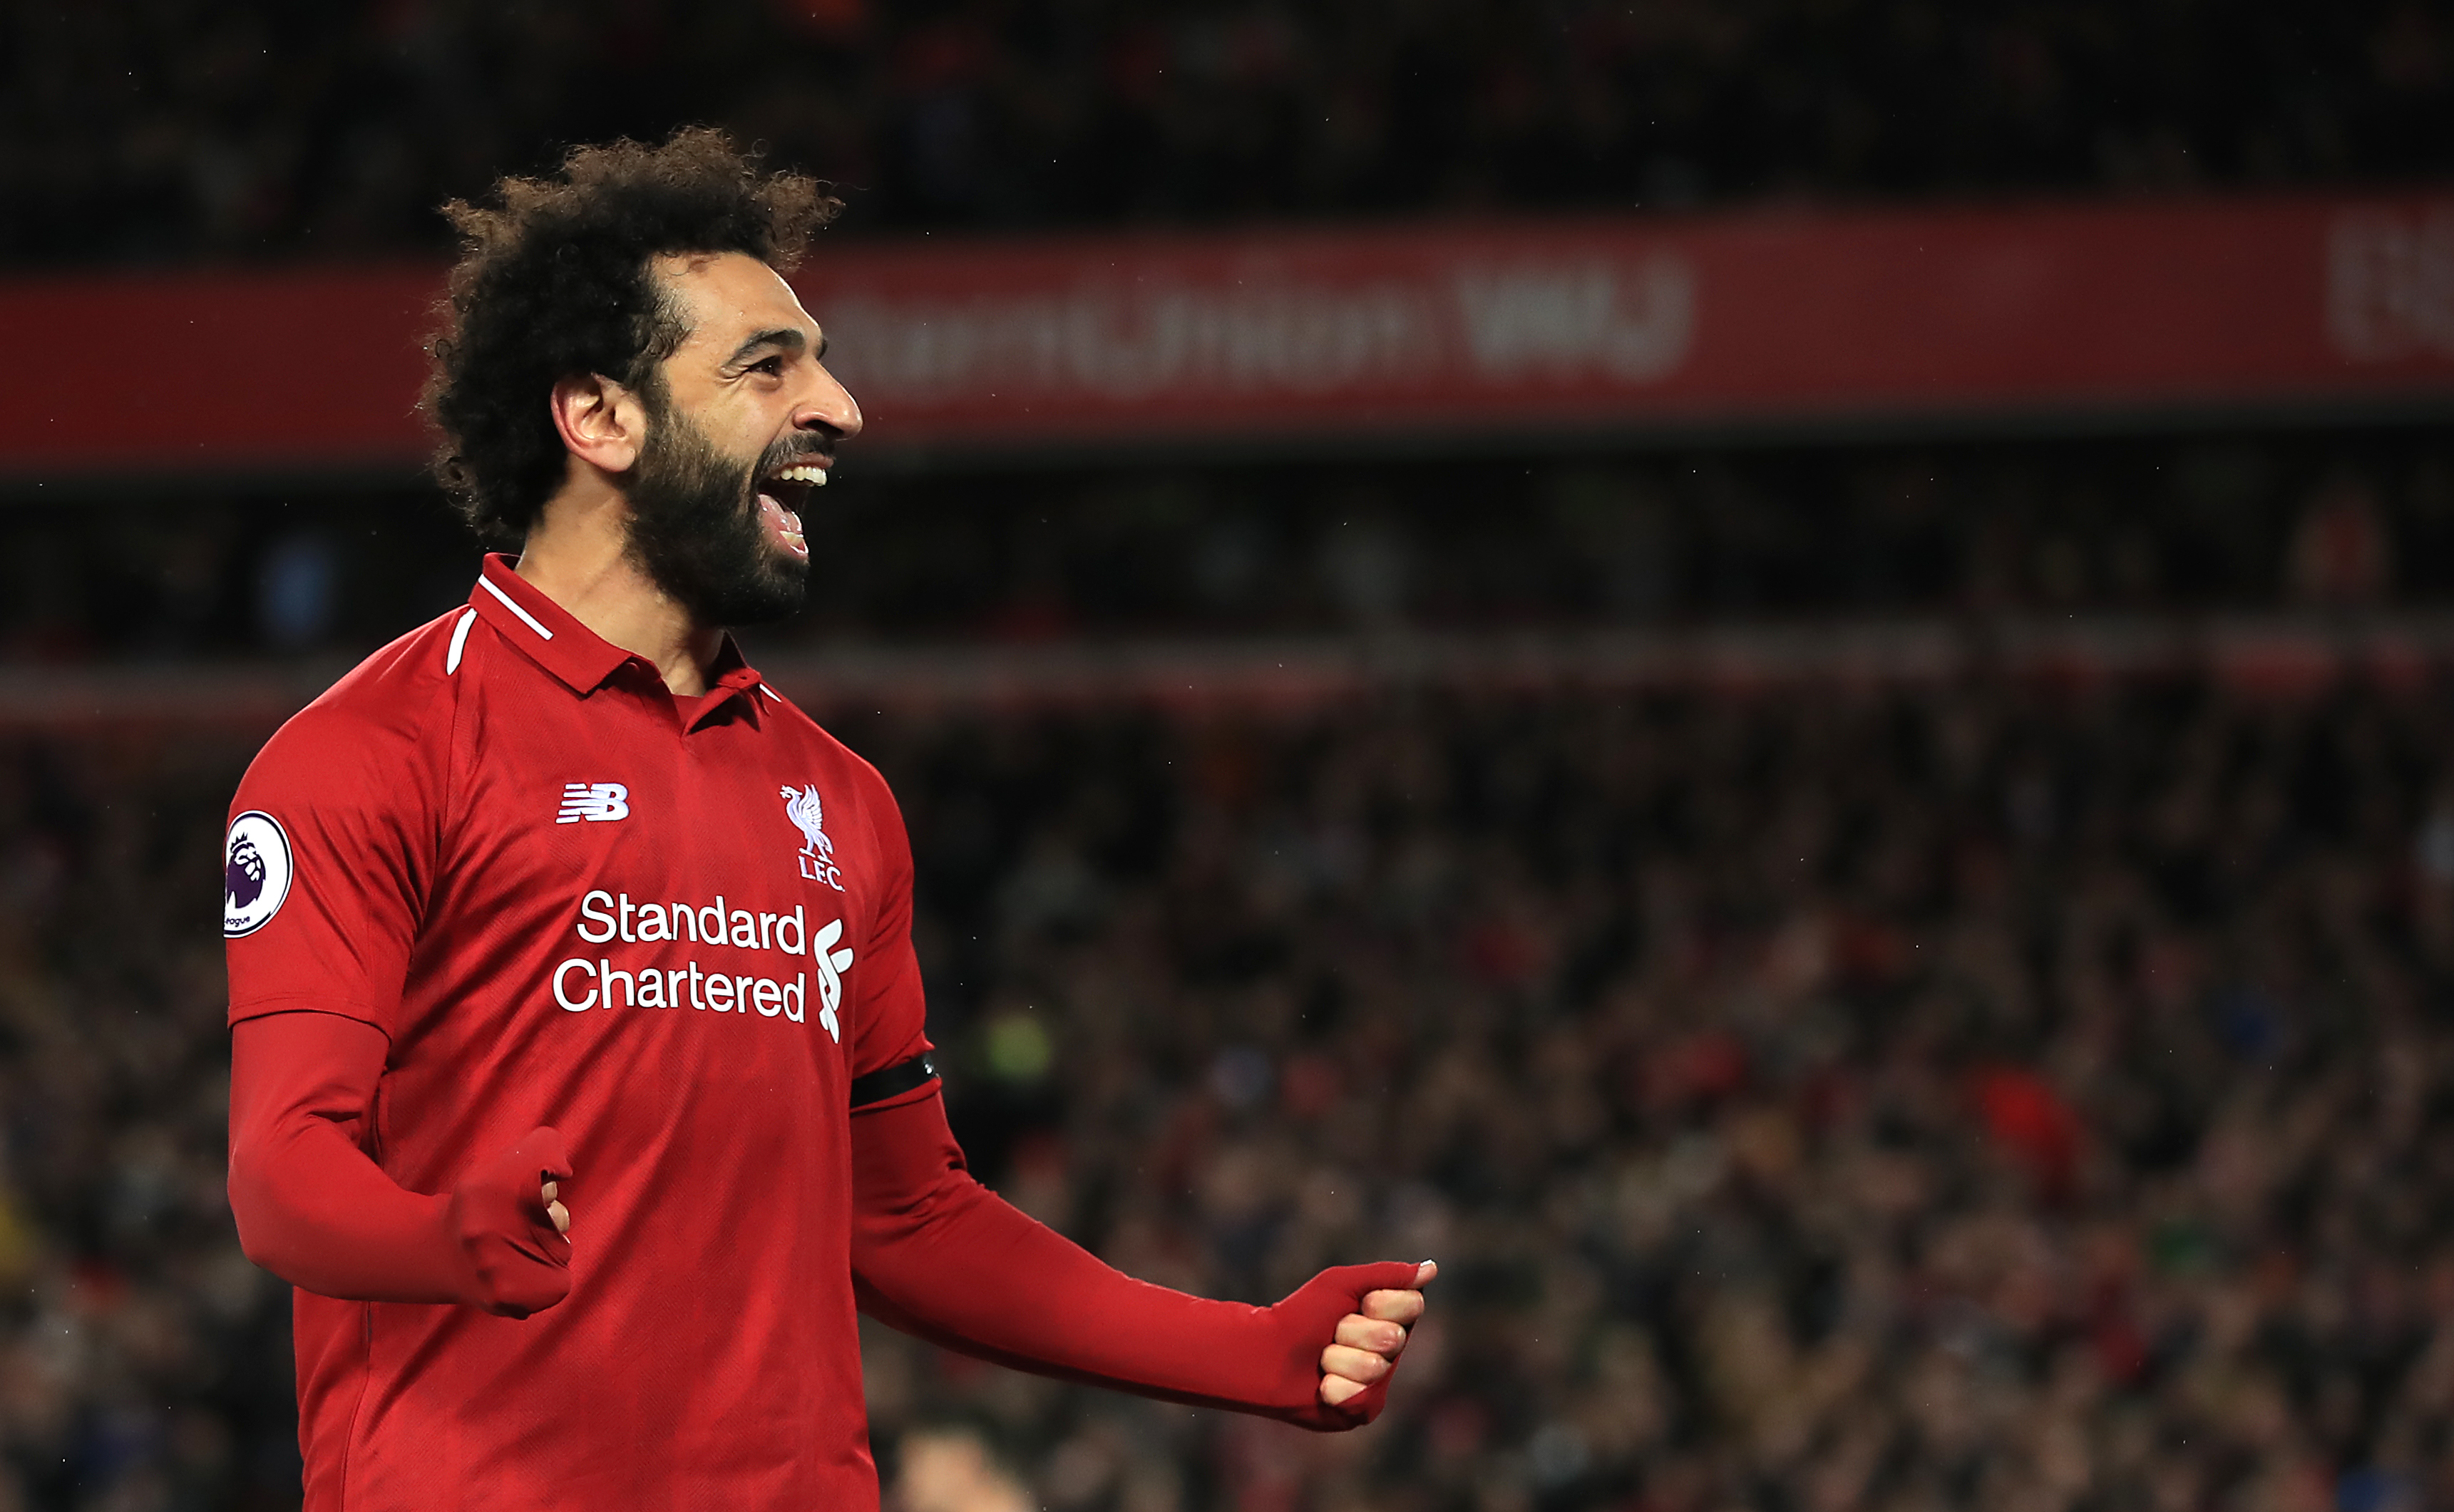 Liverpool's Mohamed Salah celebrates scoring a goal